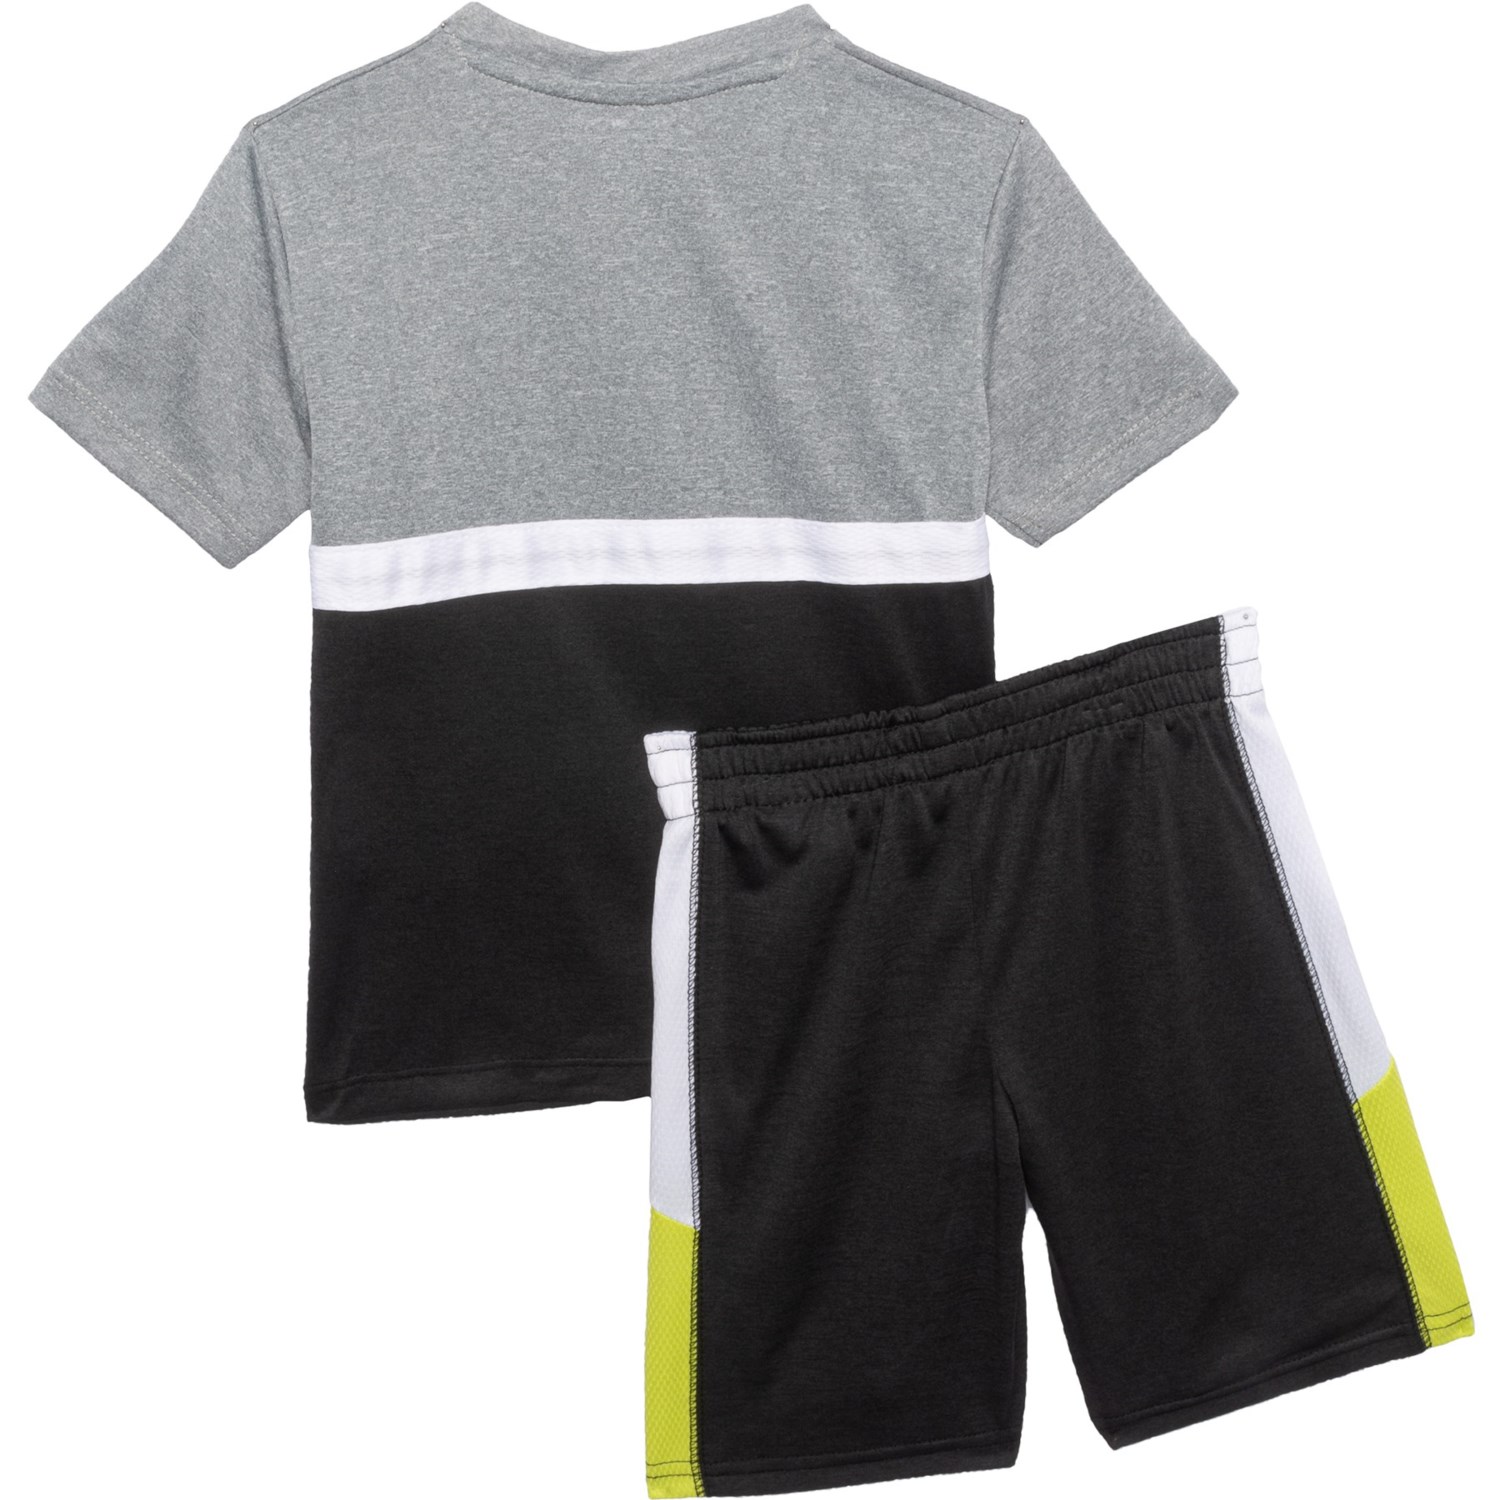 - Size 5 or Size 6 Boys Reebok Summer Outfit New Shirt, Shorts; Orange/Blue